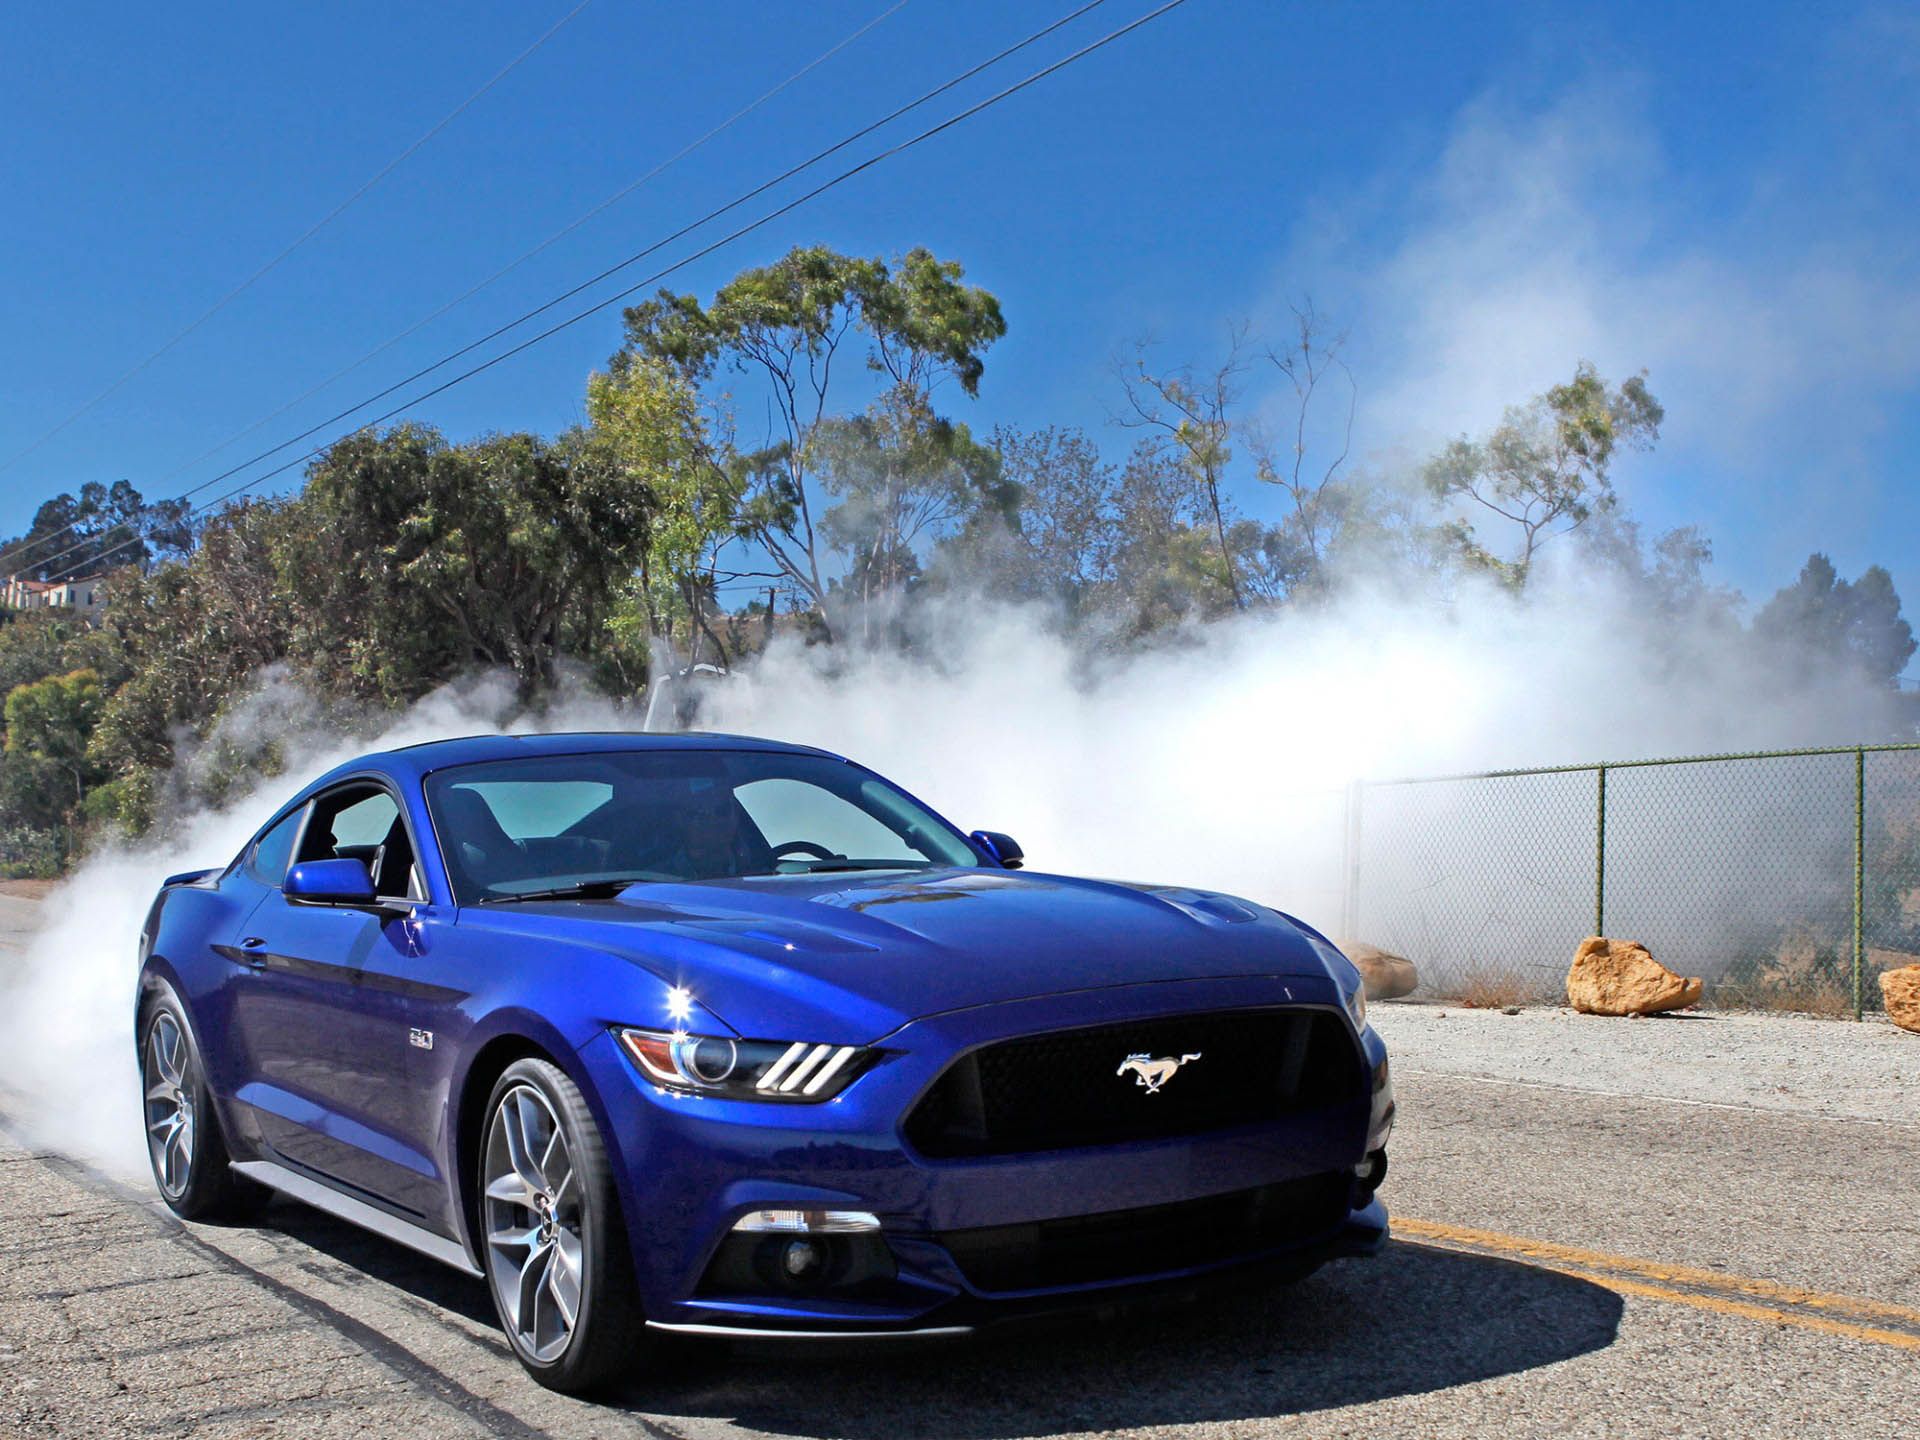 2016 Ford Mustang Gt Blue - HD Wallpaper 